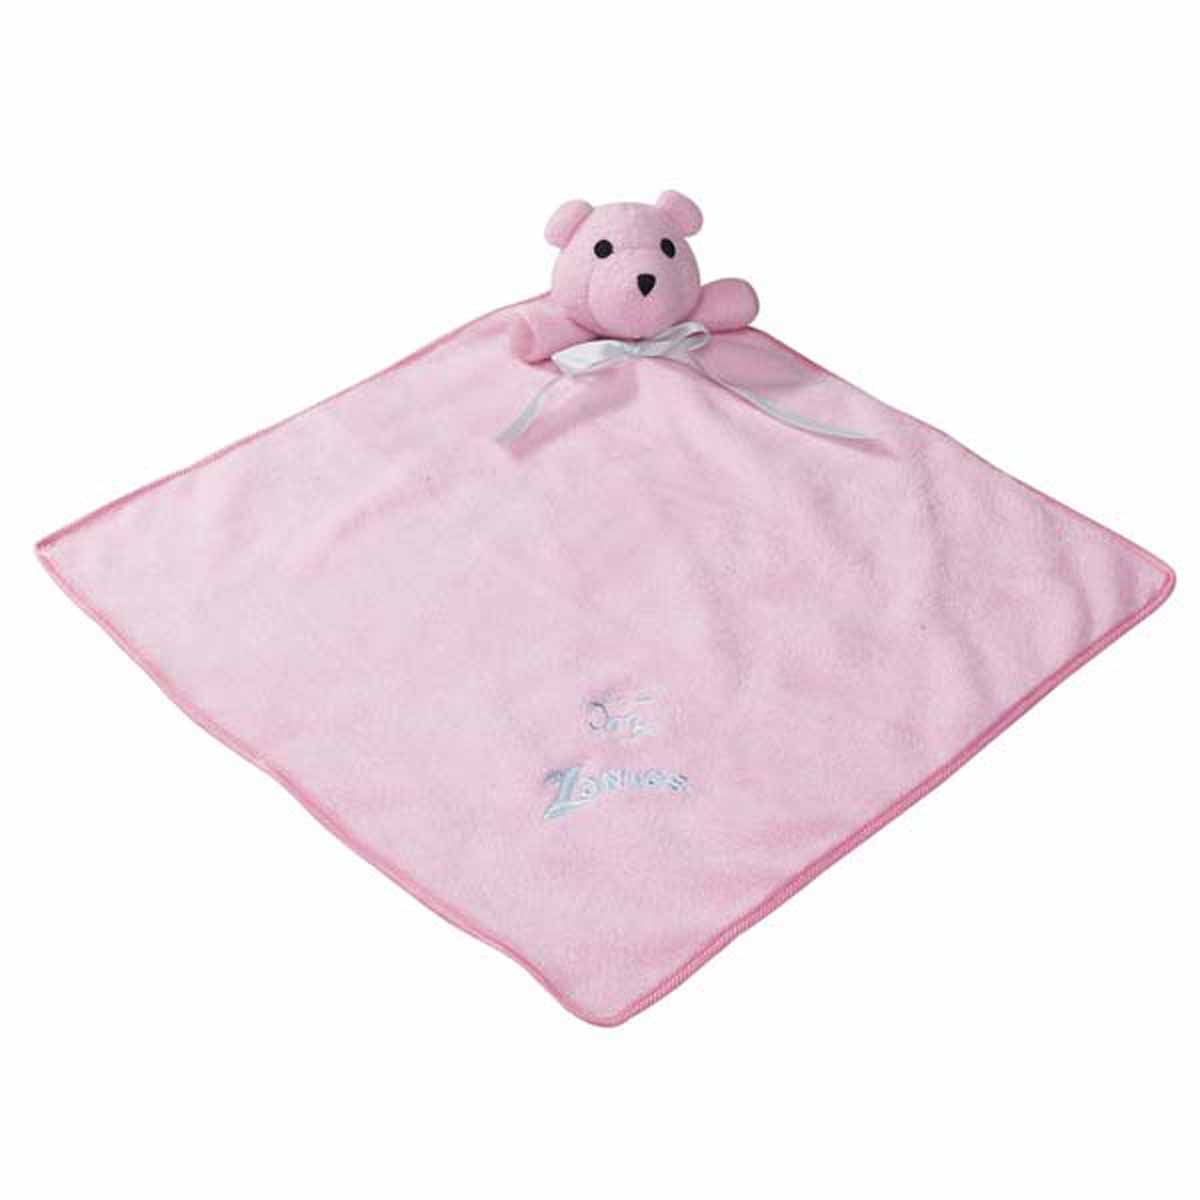 Zanies Snuggle Bear Puppy Blanket - Princess Pink